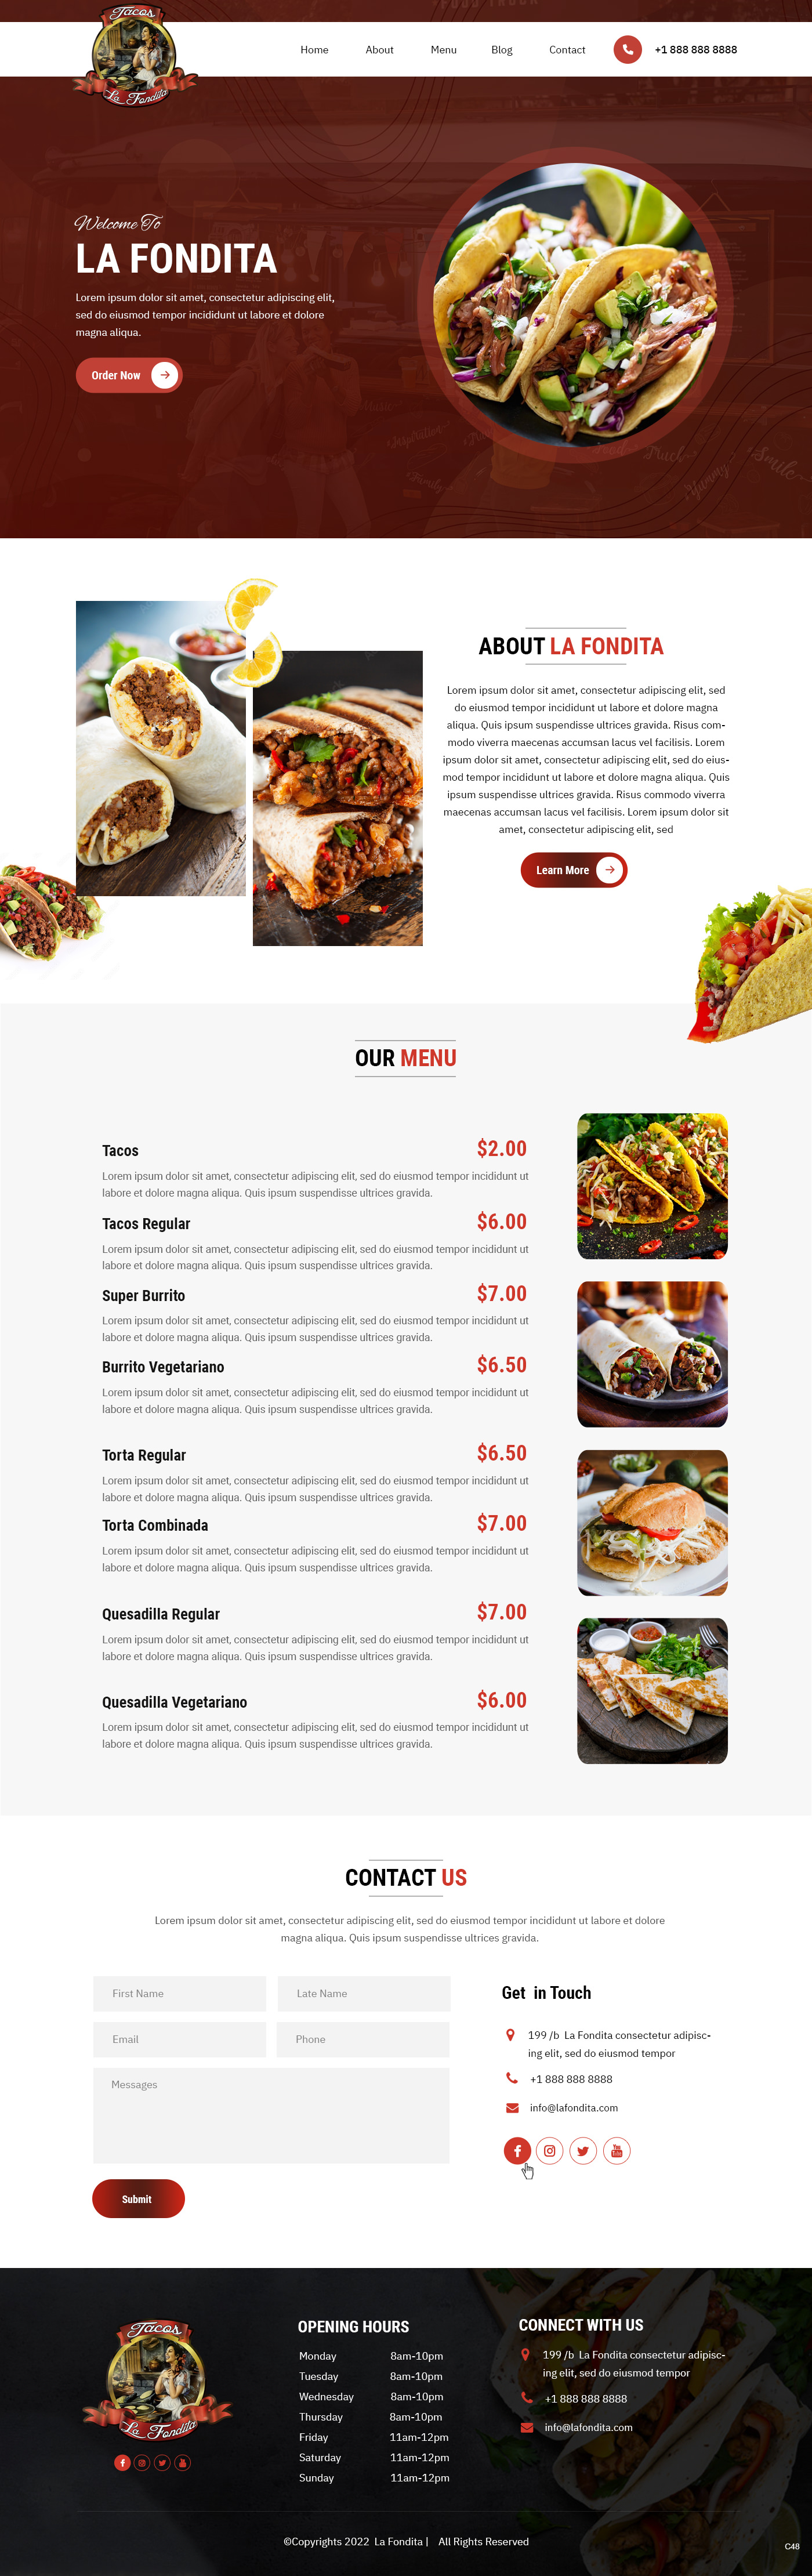 Food or Taco Truck website design example